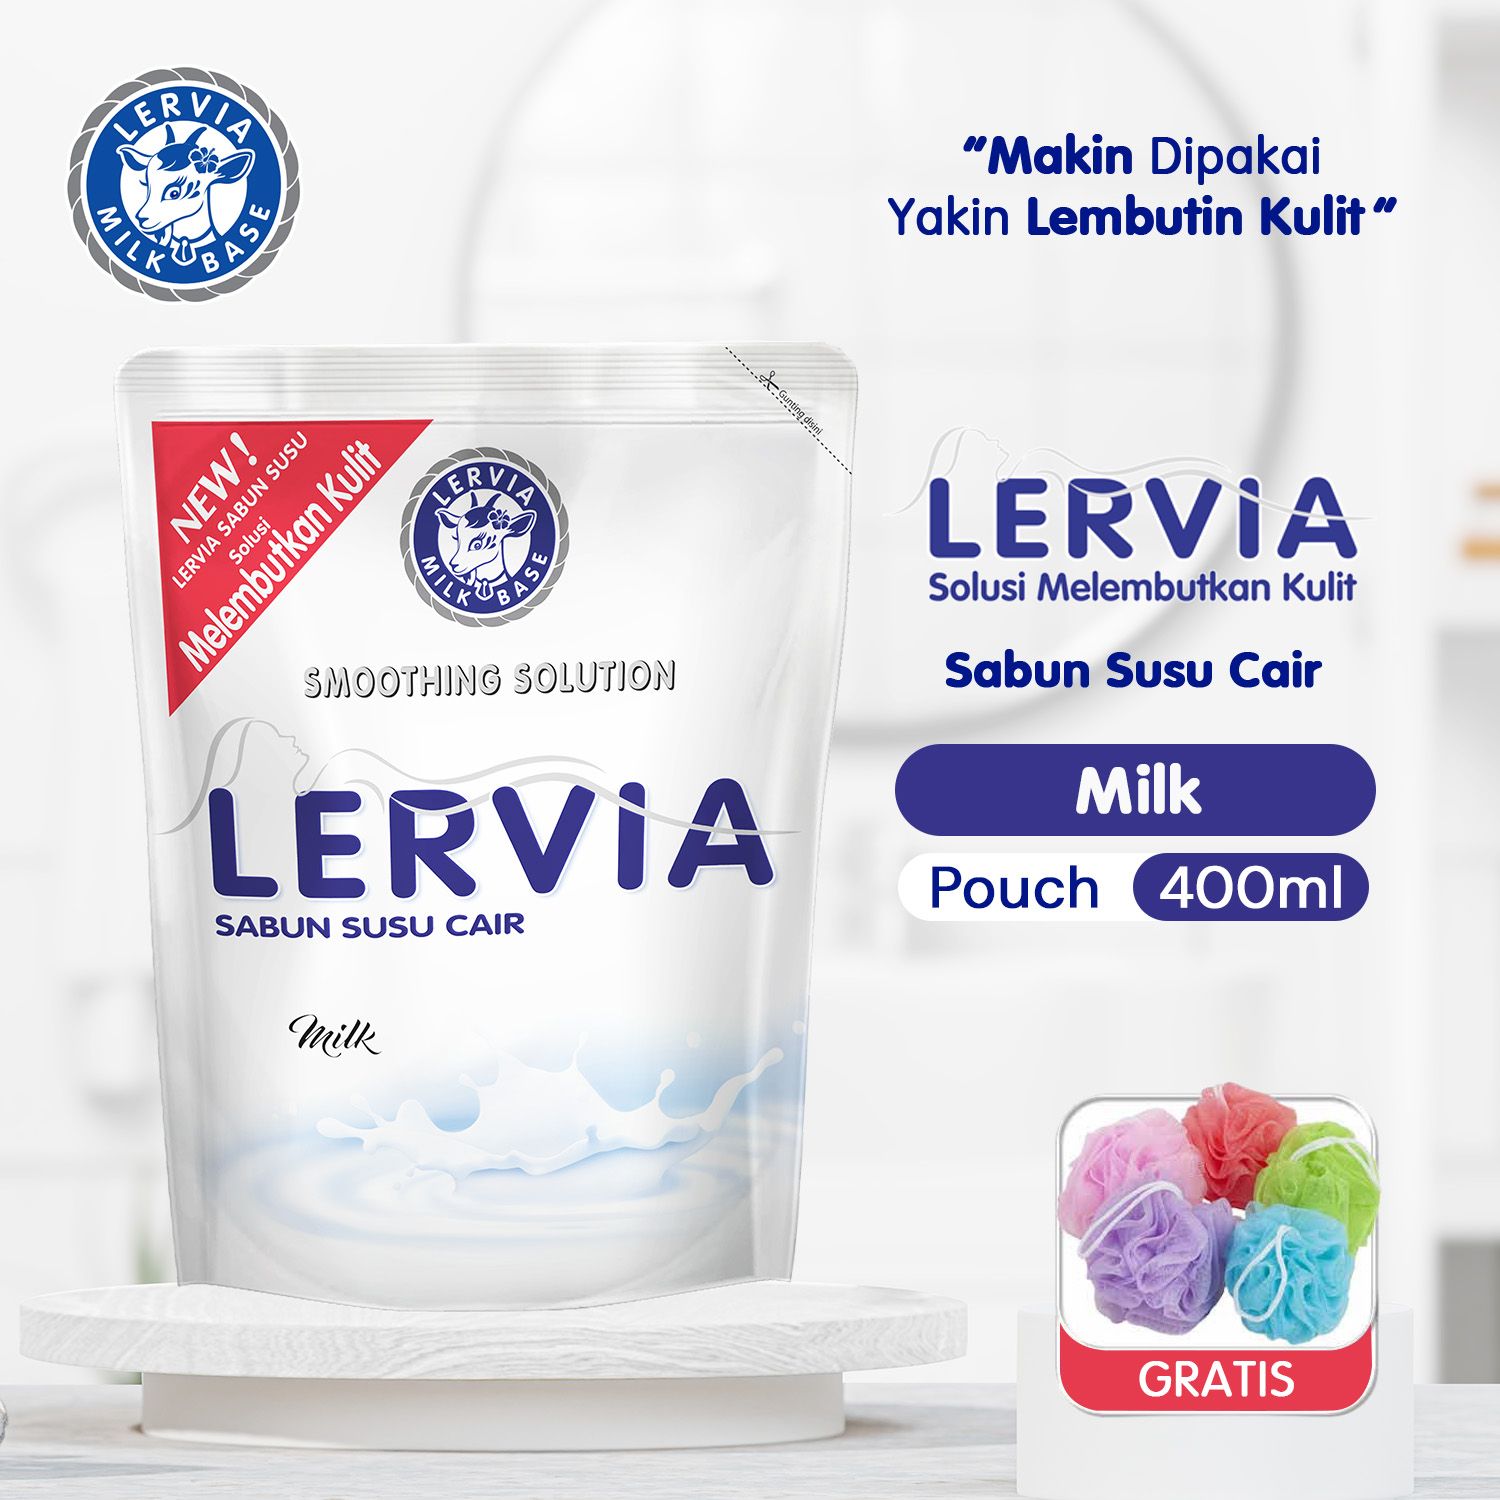 (Free Gift) LERVIA Sabun Susu Cair Milk 400mL Value Pack - 1